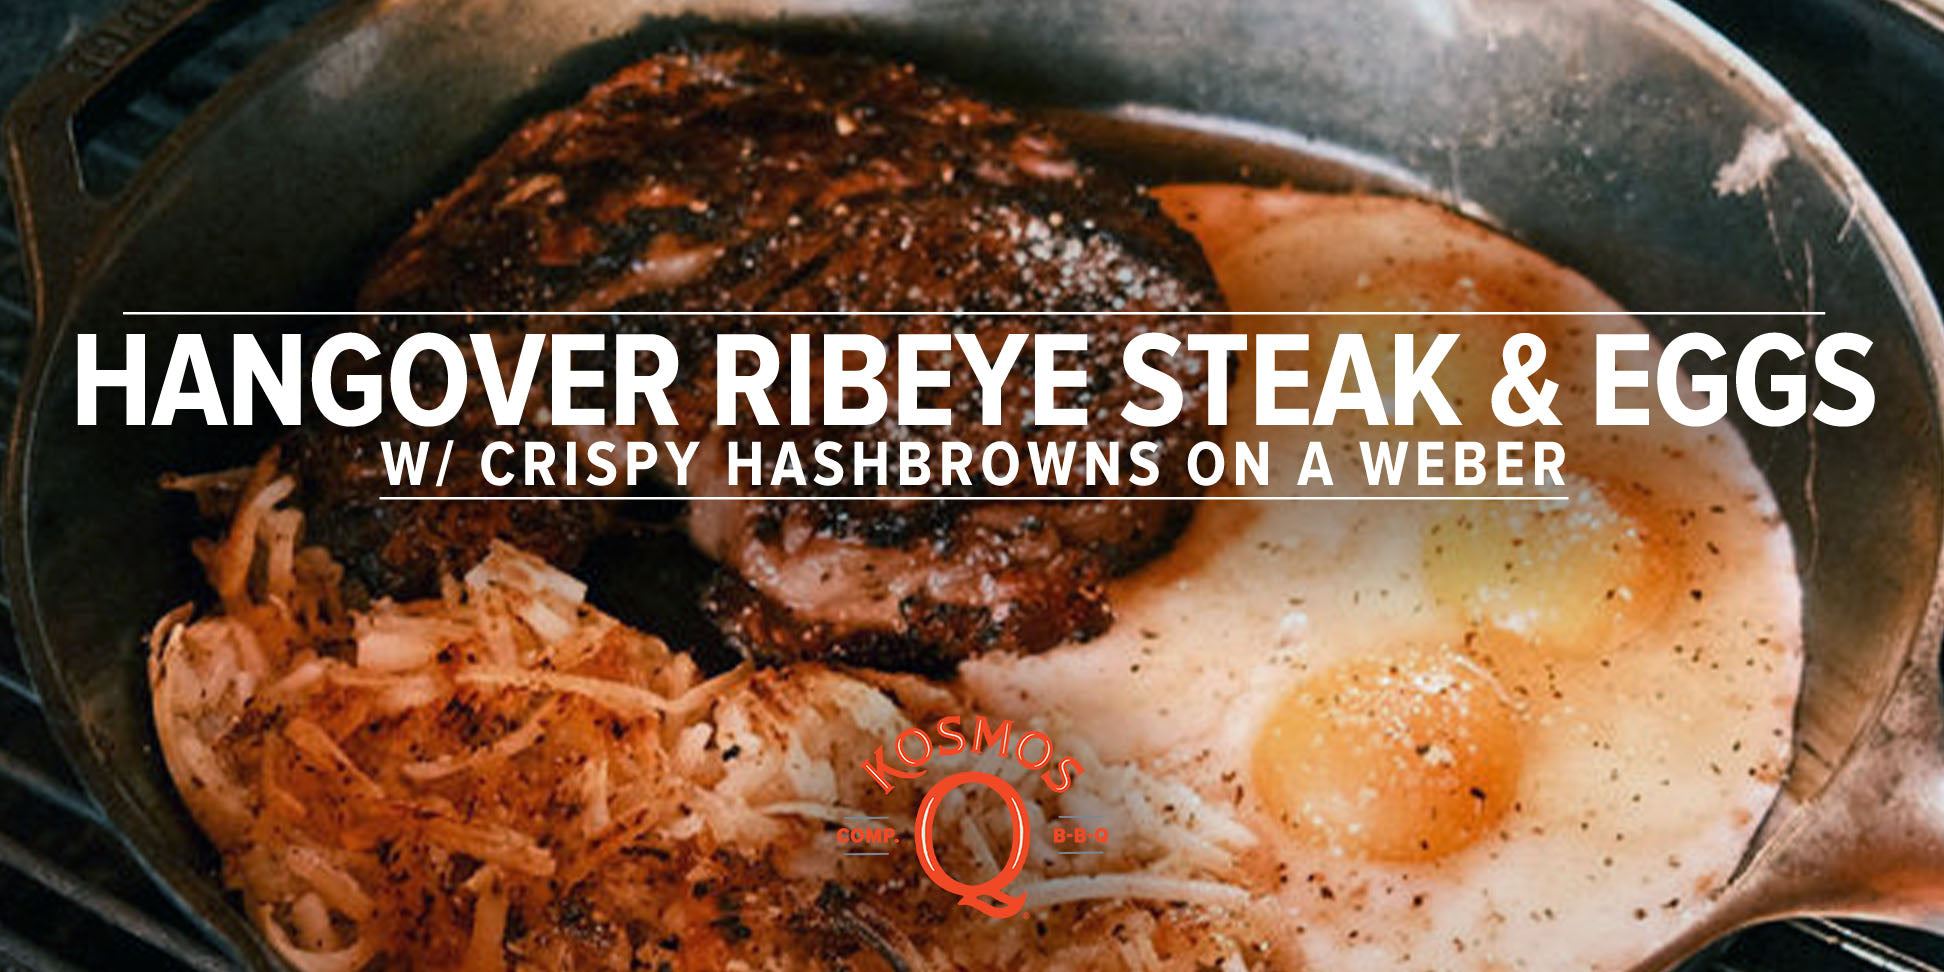 Hangover Ribeye Steak & Eggs with Crispy Hashbrowns